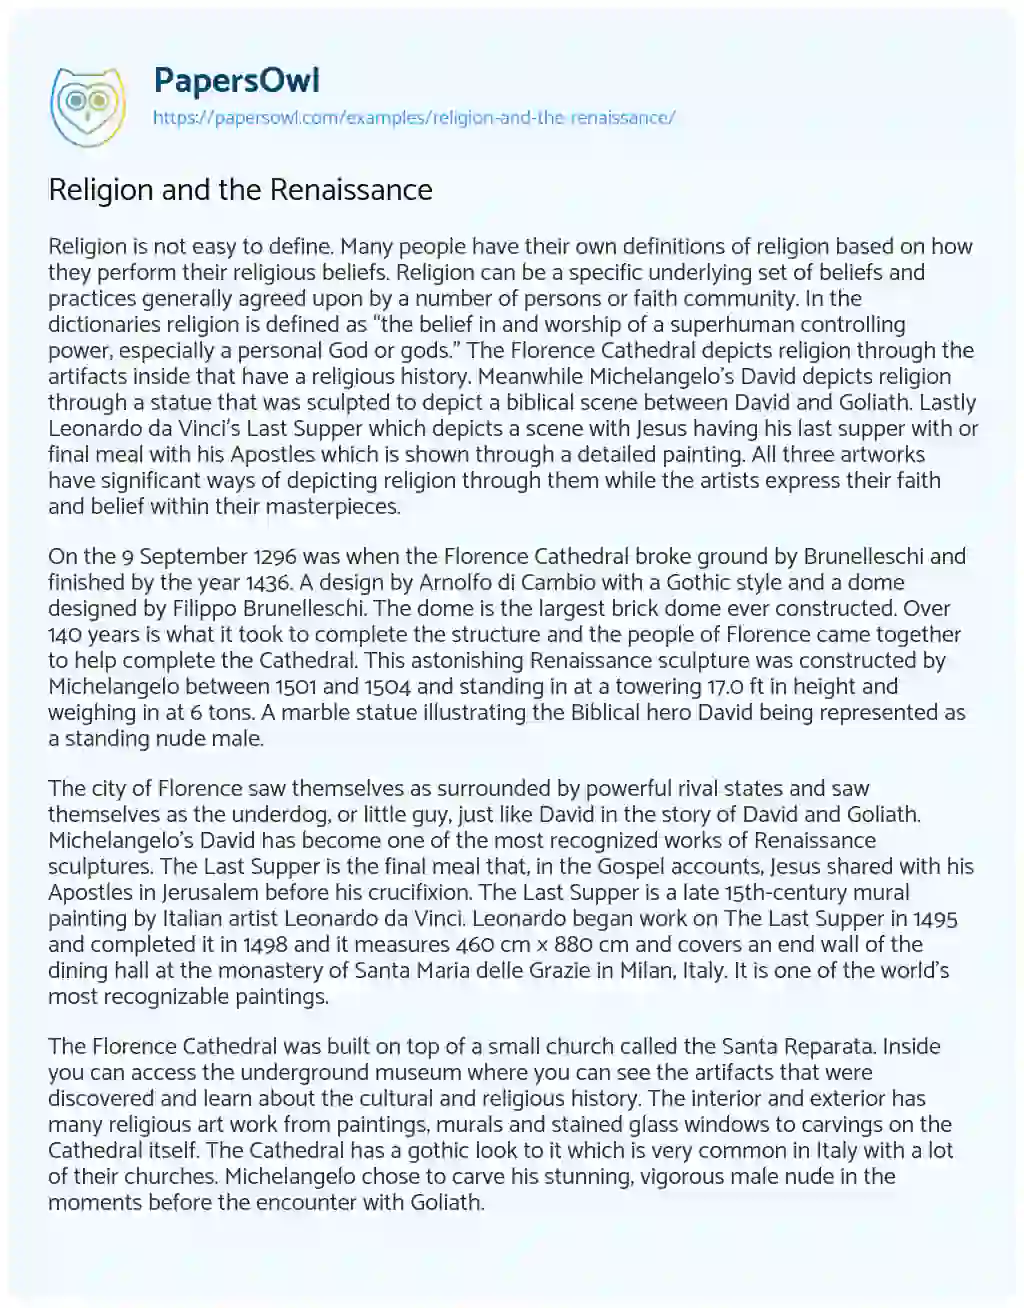 Religion and the Renaissance essay